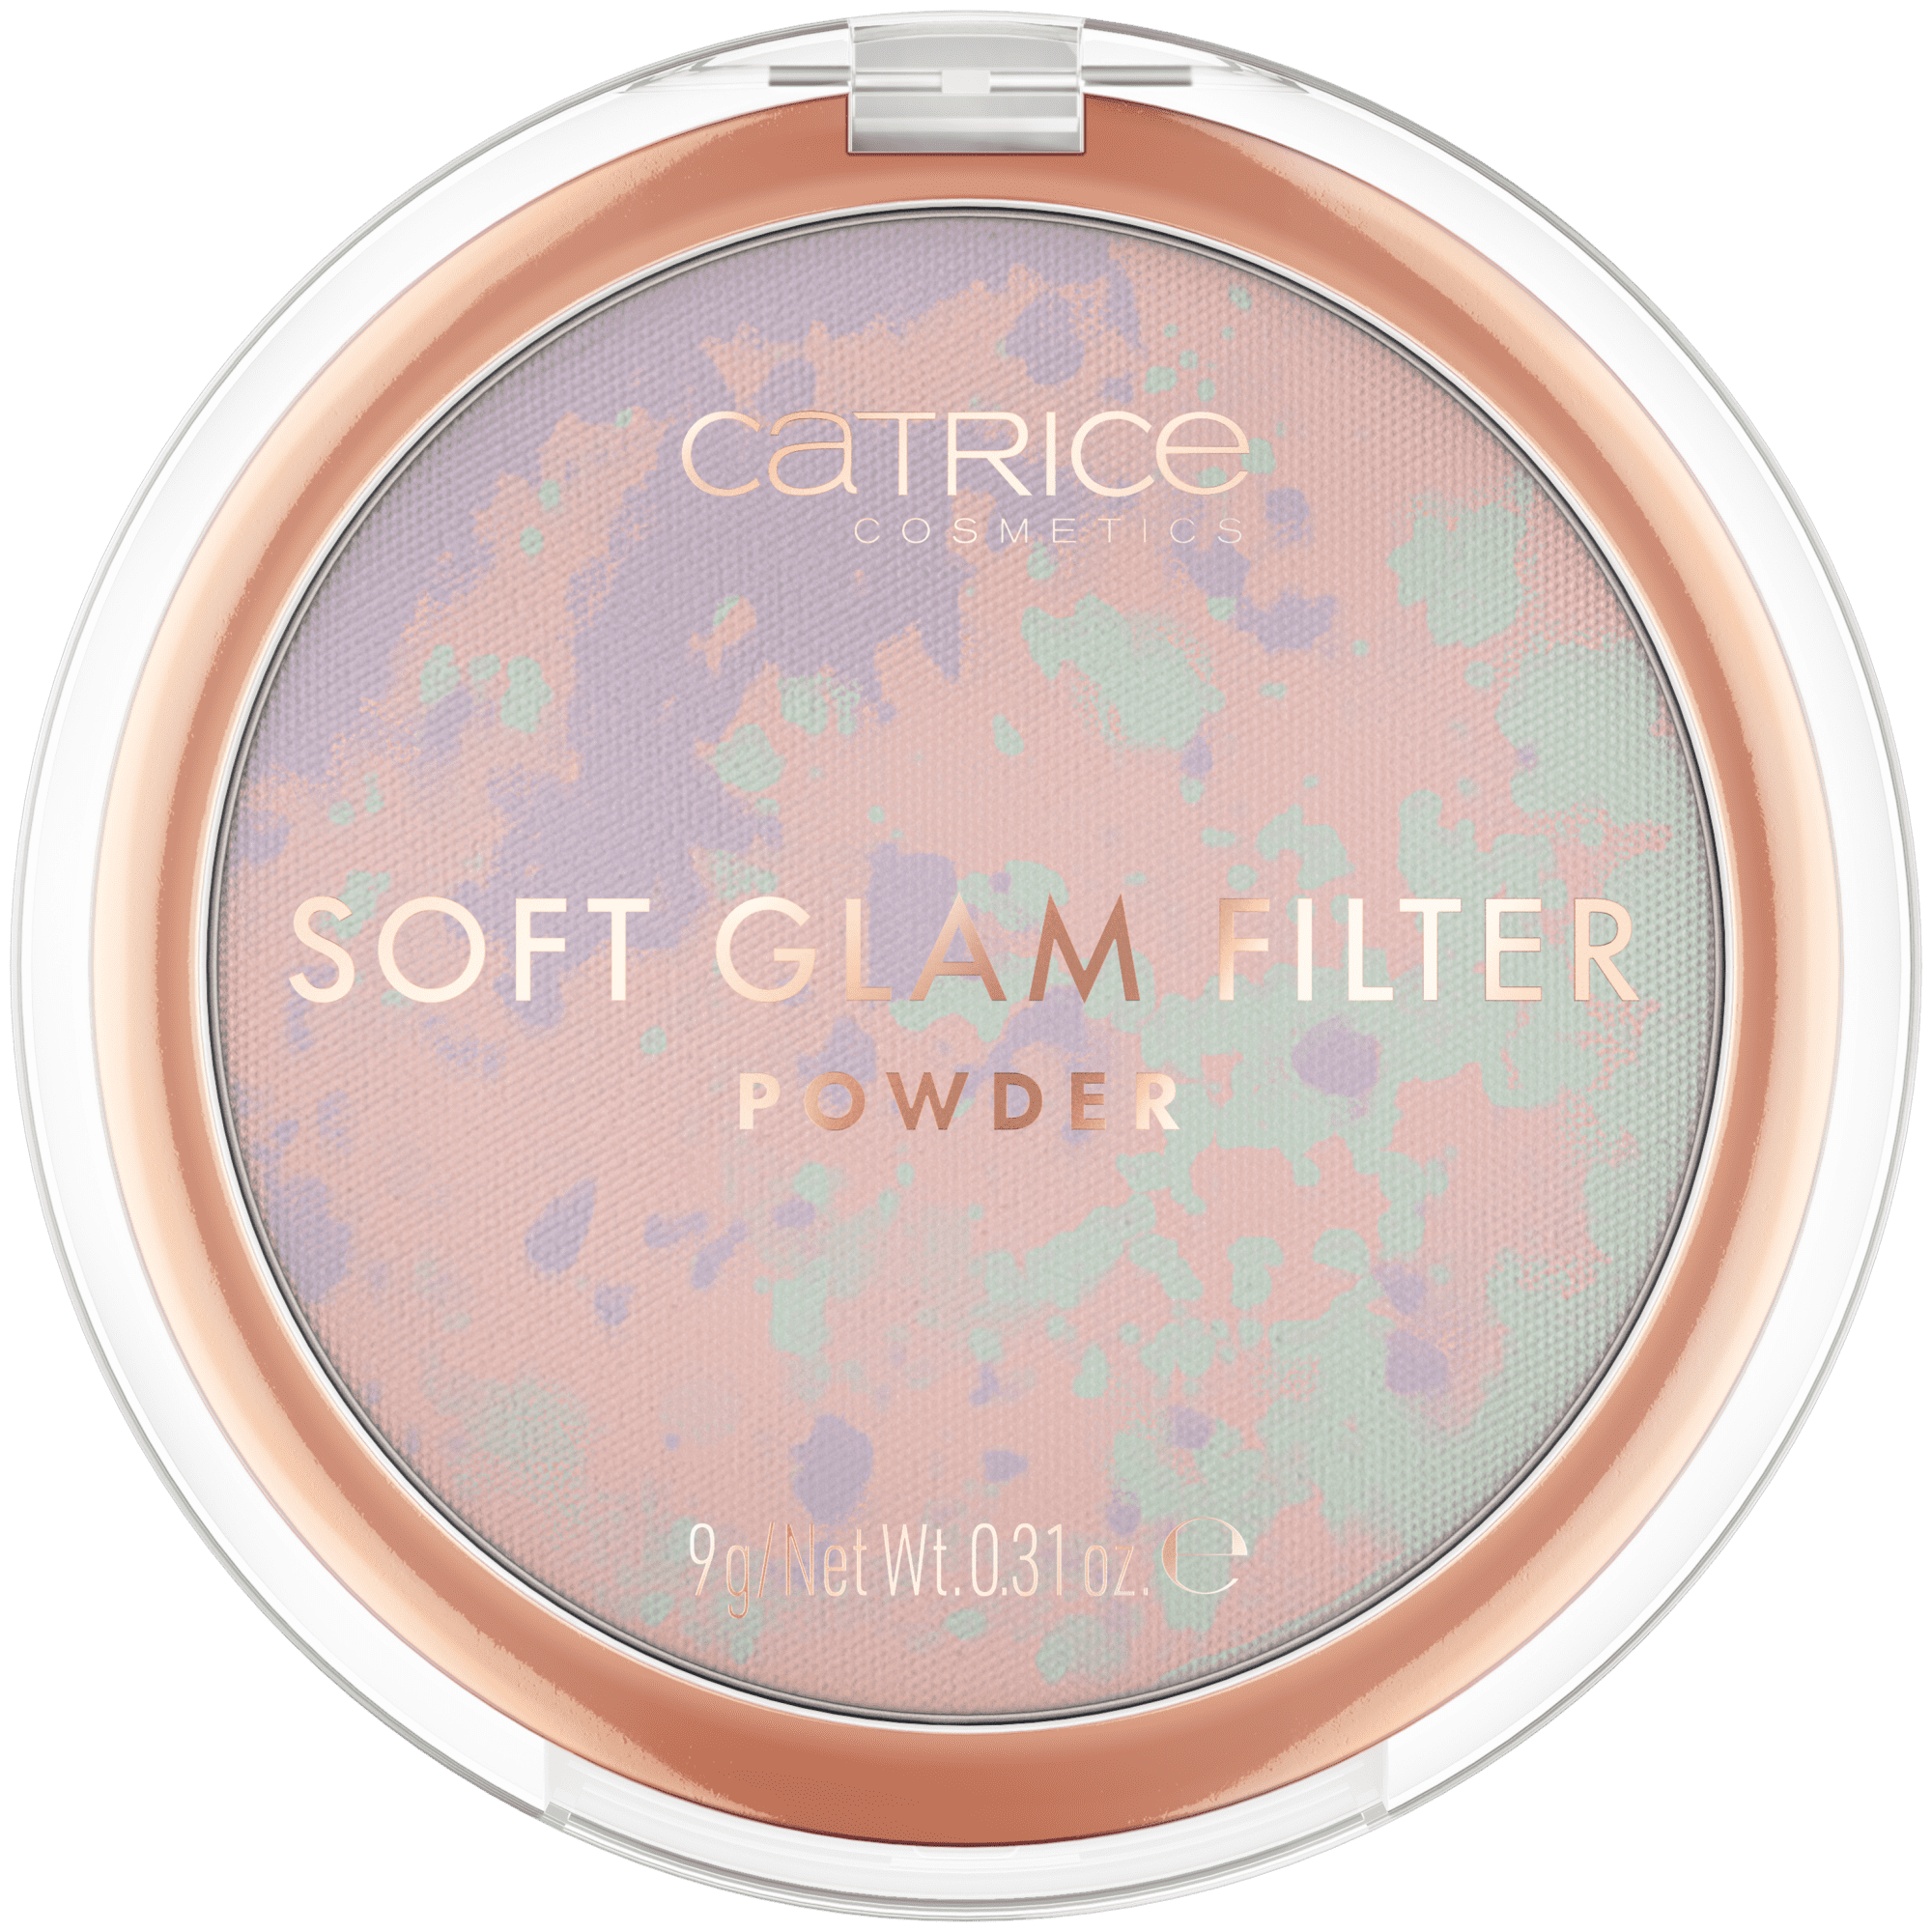 Пудра для лица 010 Catrice Soft Glam Filter, 9 гр консилер для лица 5 оттенков catrice allround concealler 6 мл